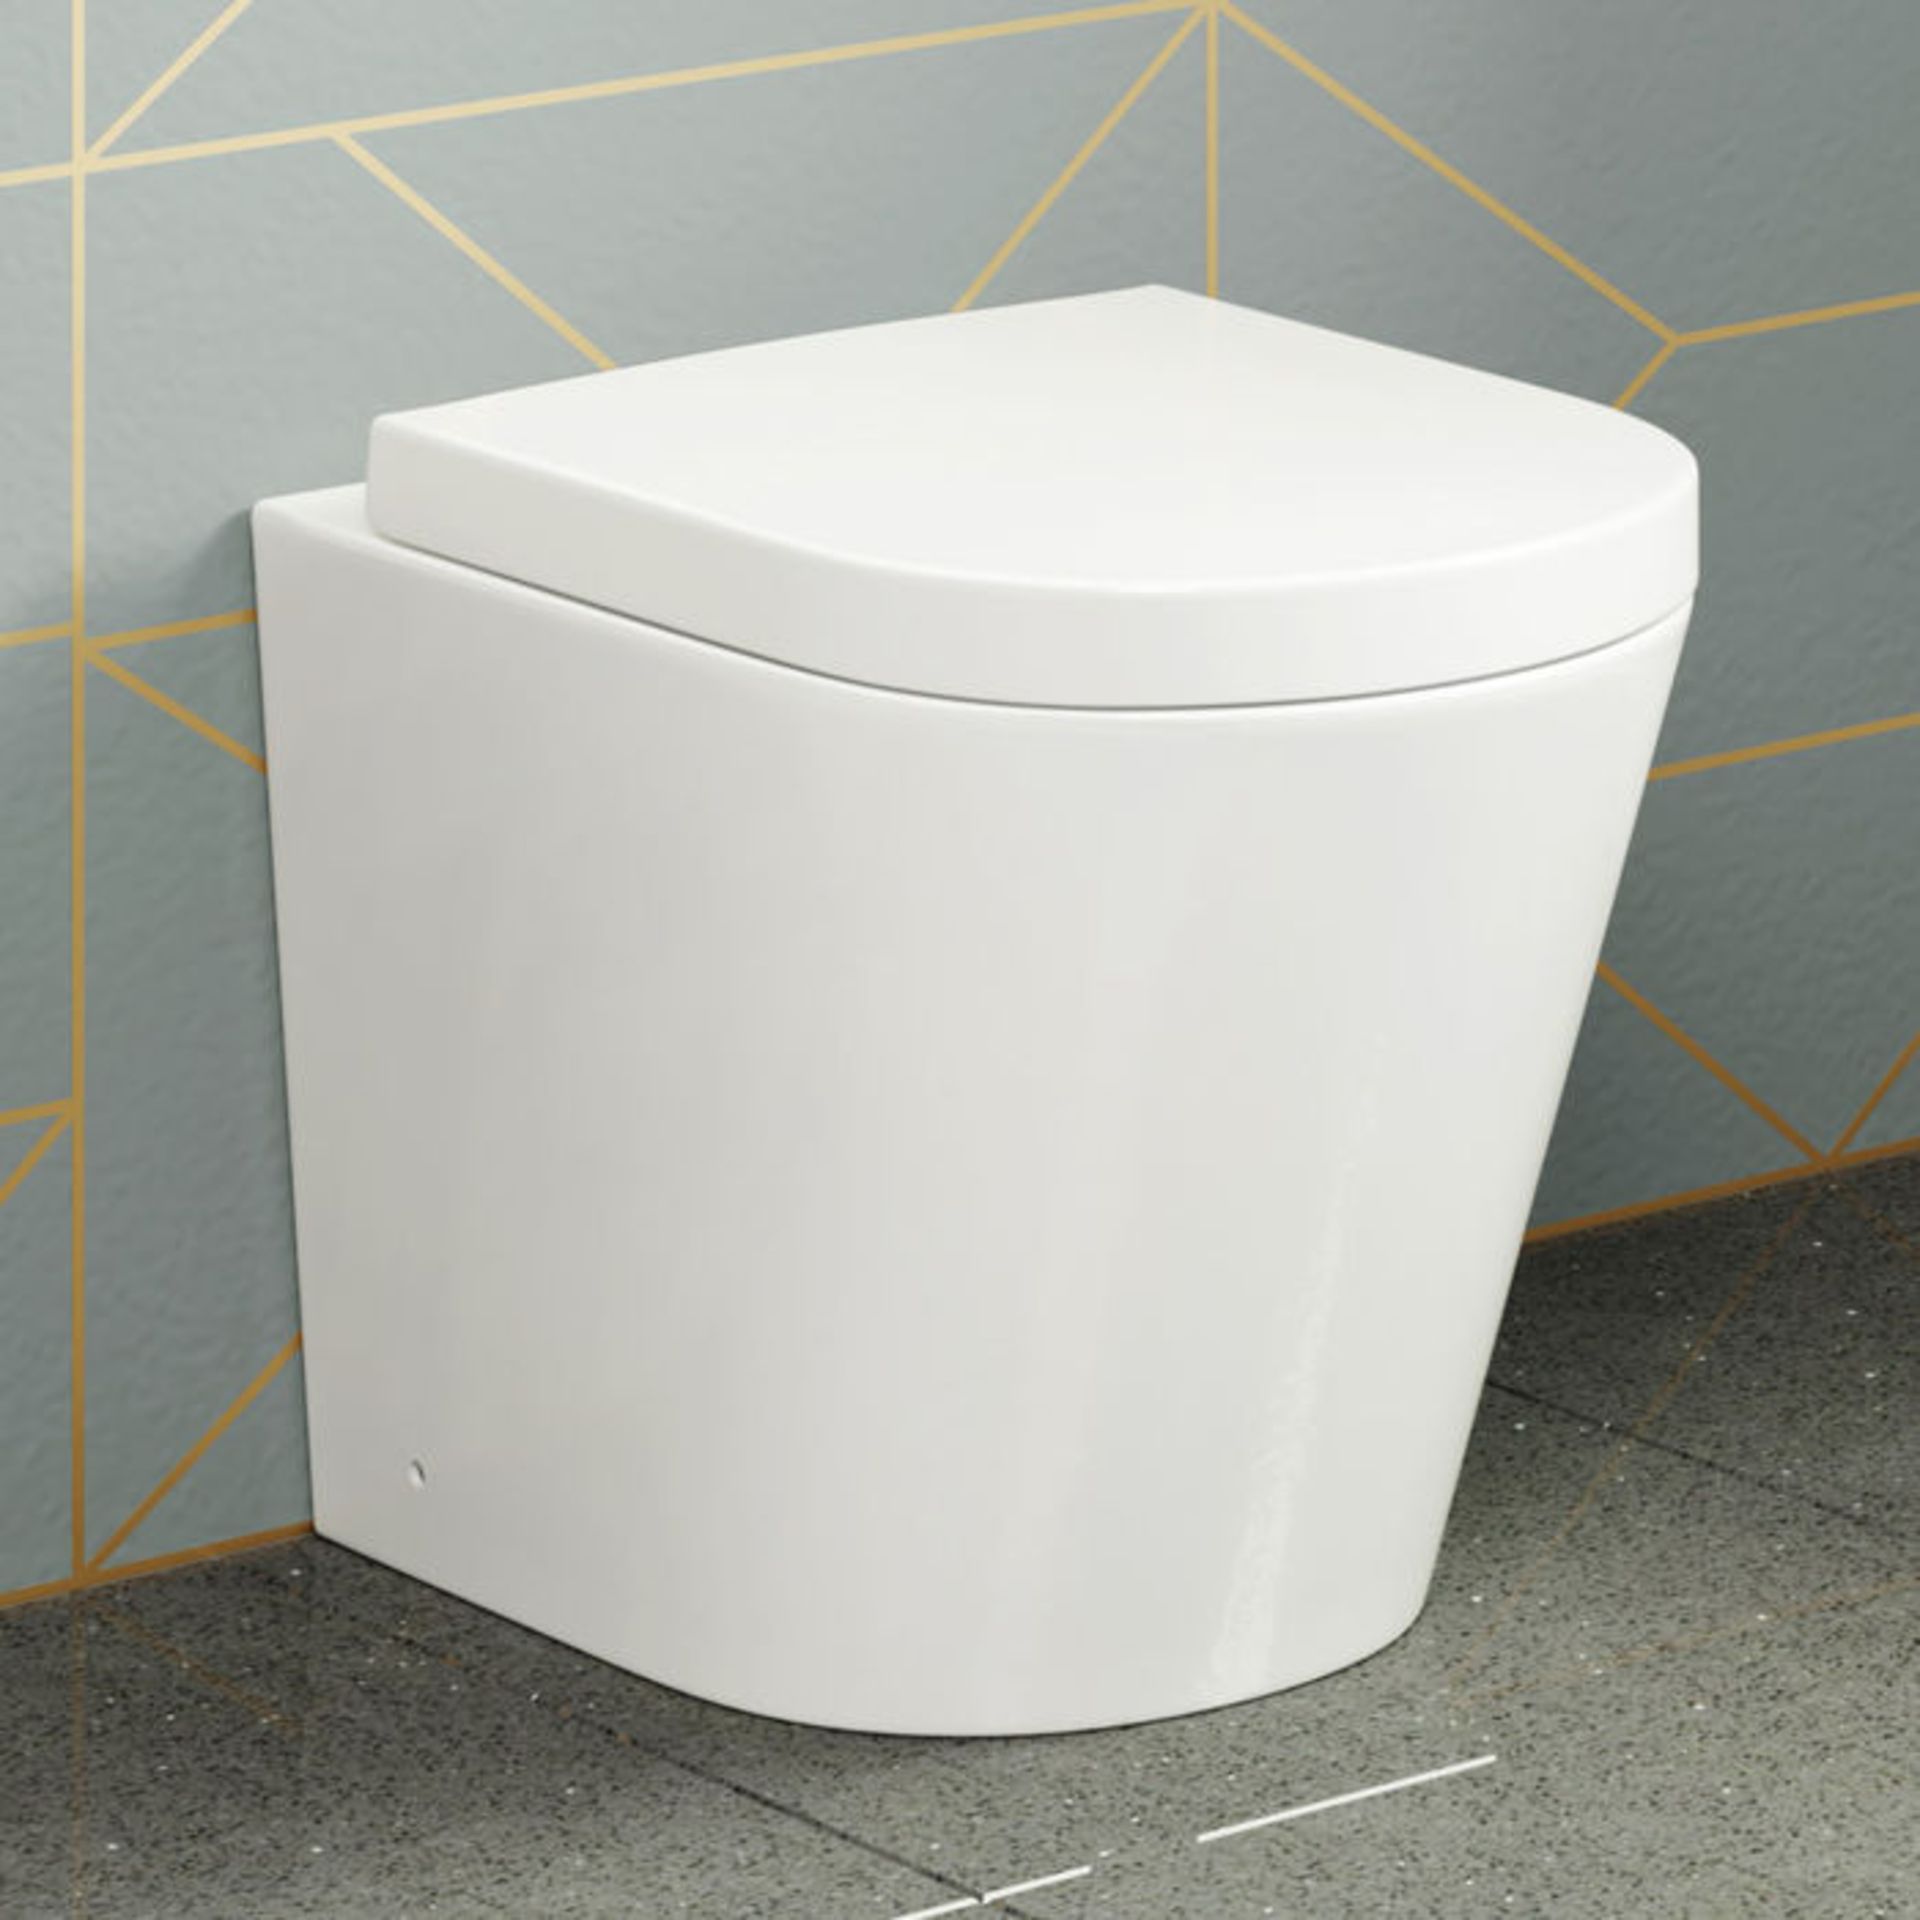 (P251) Lyon Back to Wall Toilet inc Luxury Soft Close Seat. Our Lyon back to wall toilet is made